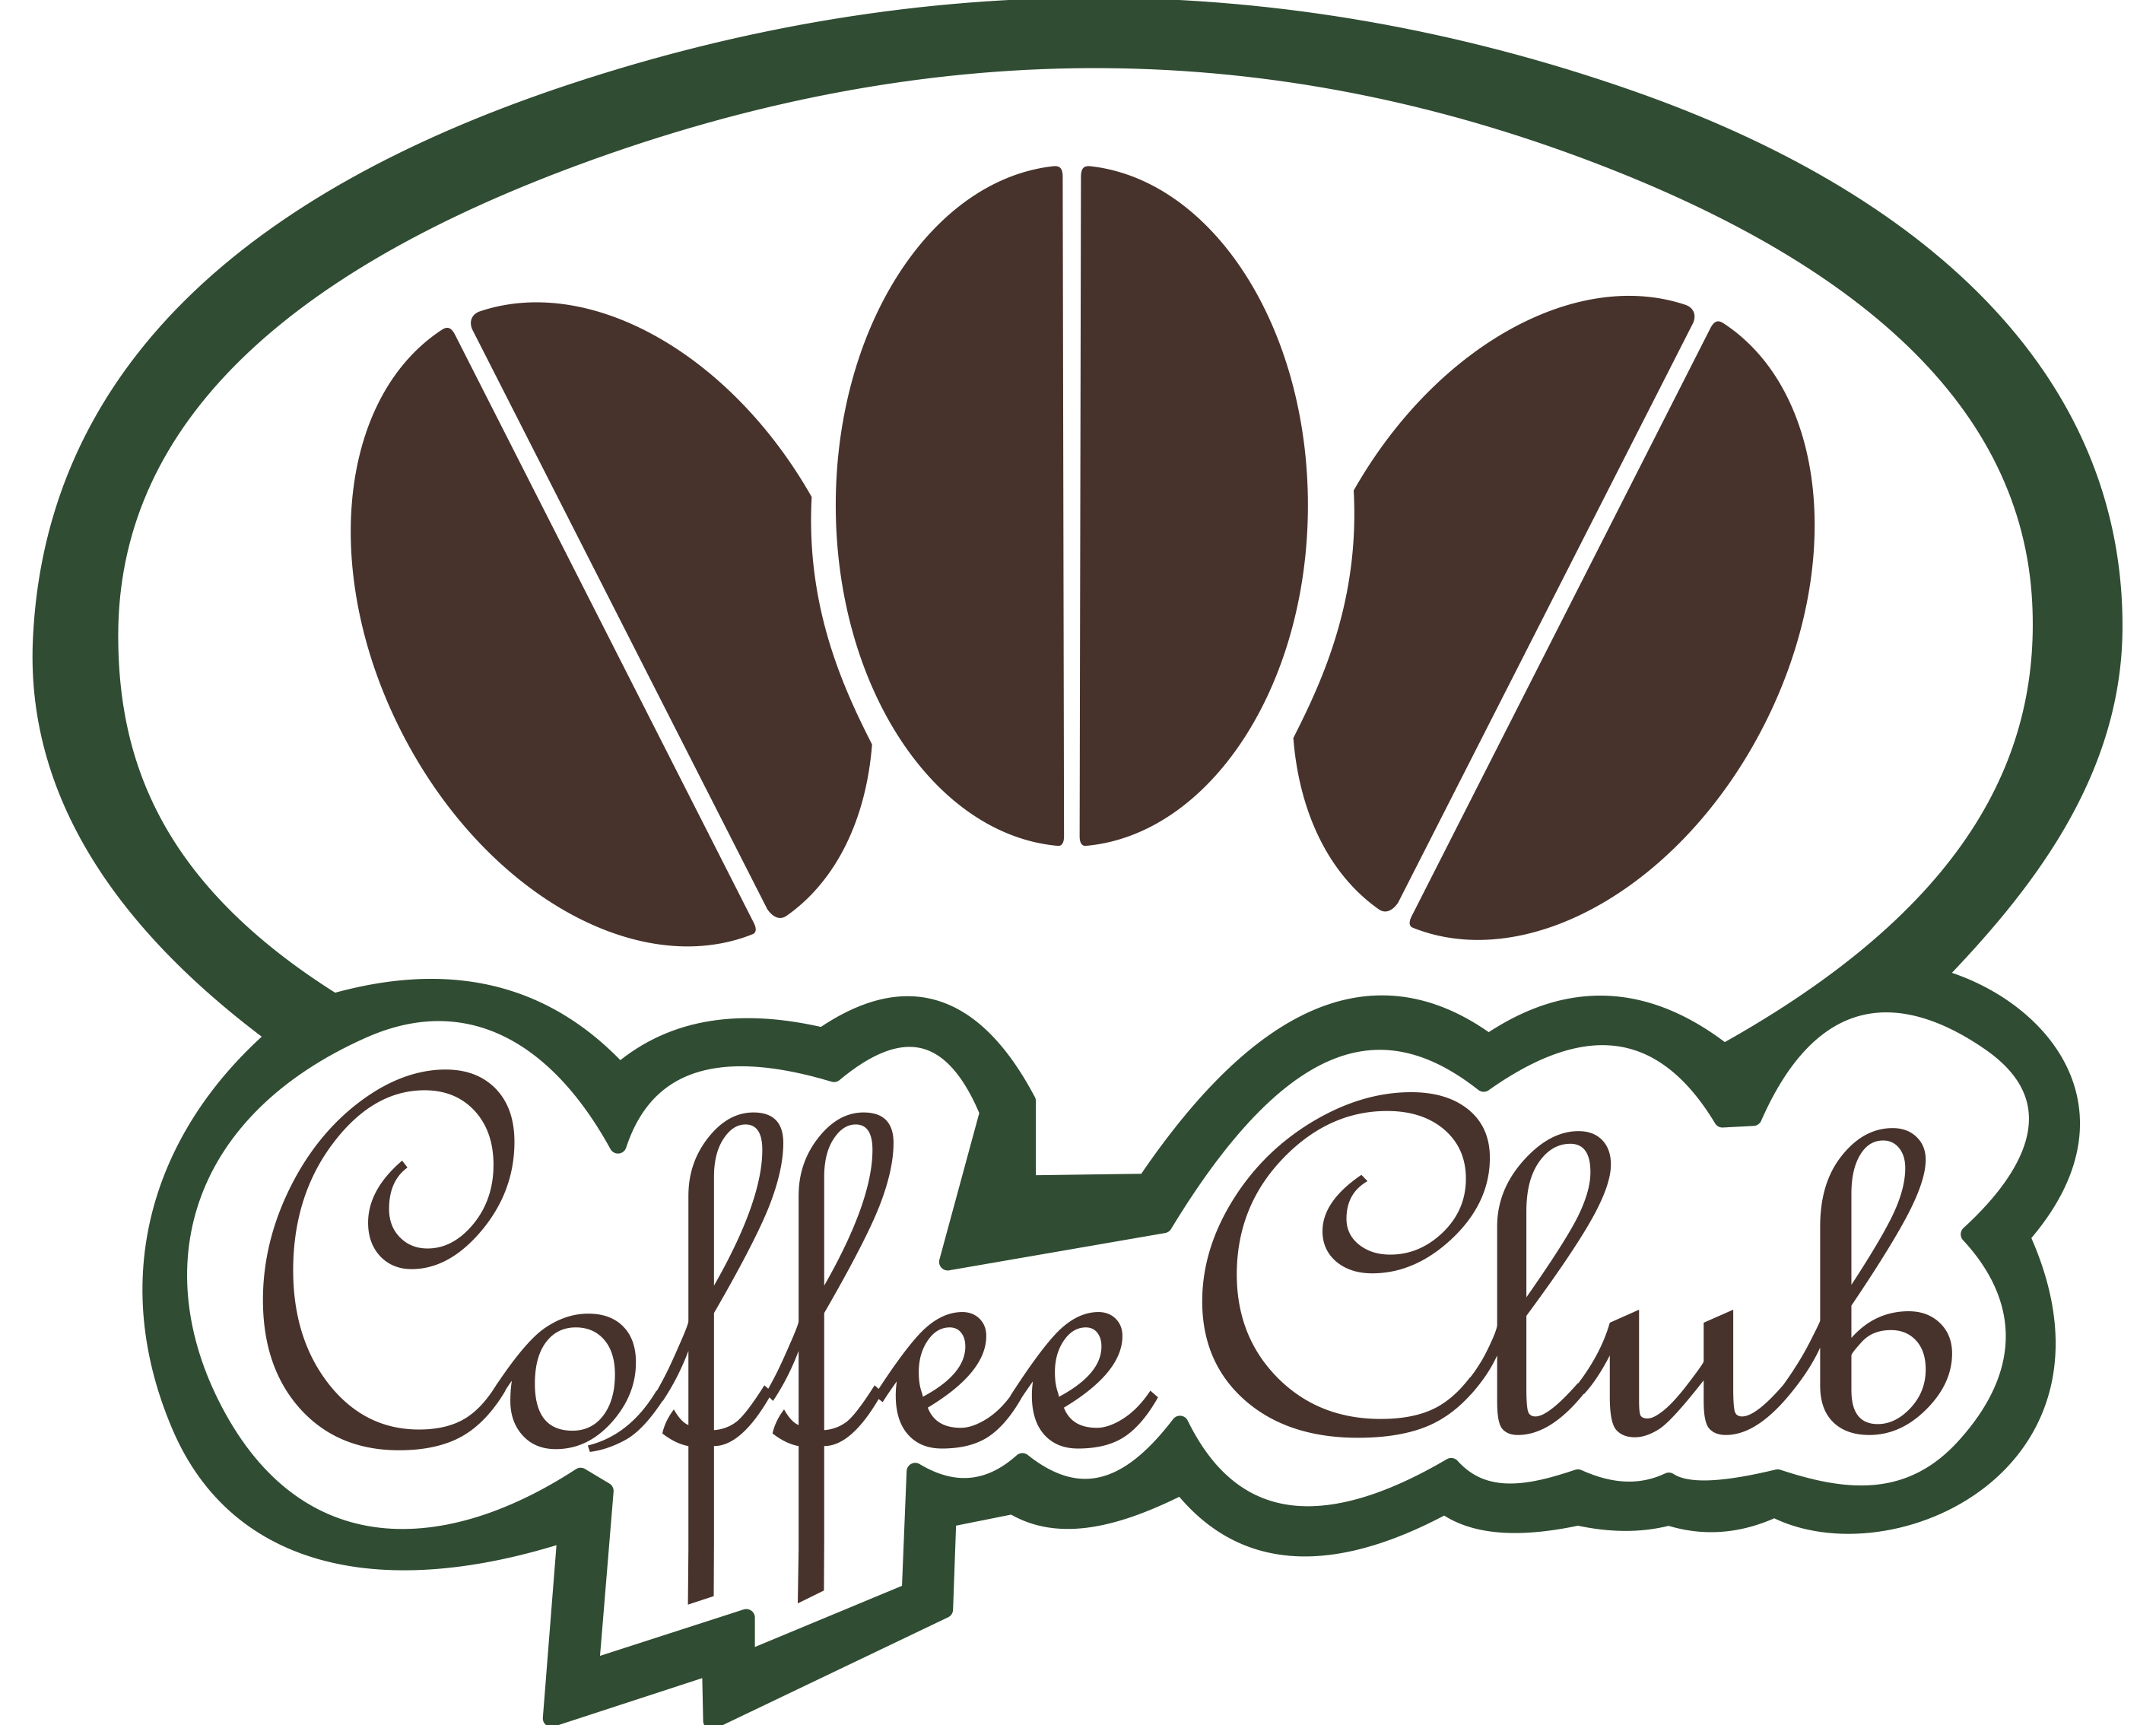 COFFE CLUB TEXCOCO